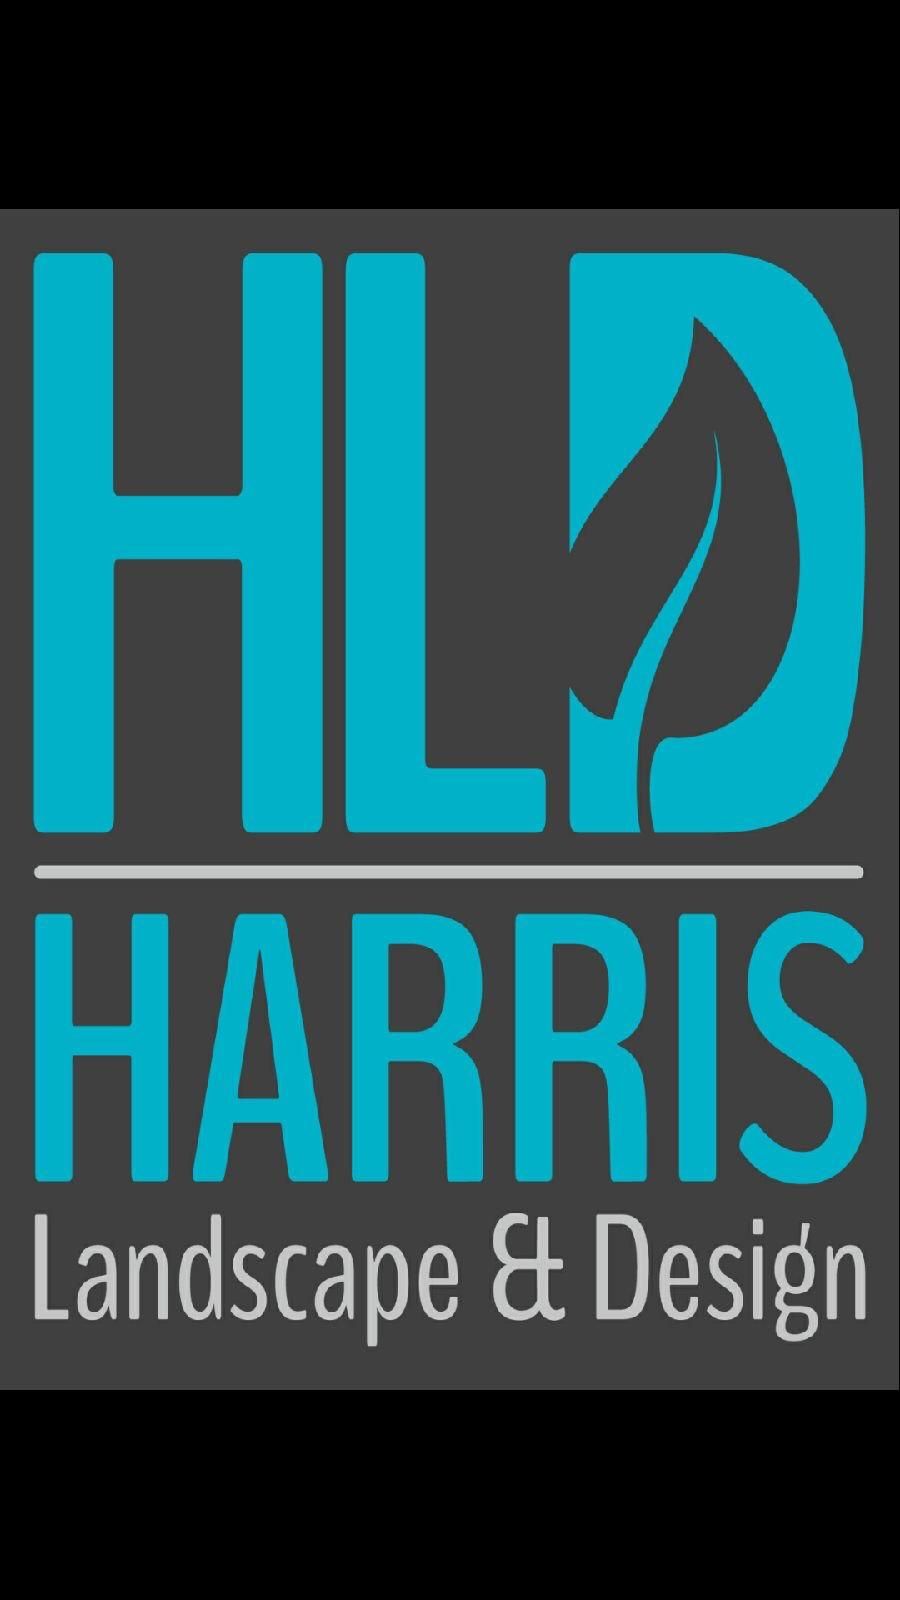 Harris landscape & design